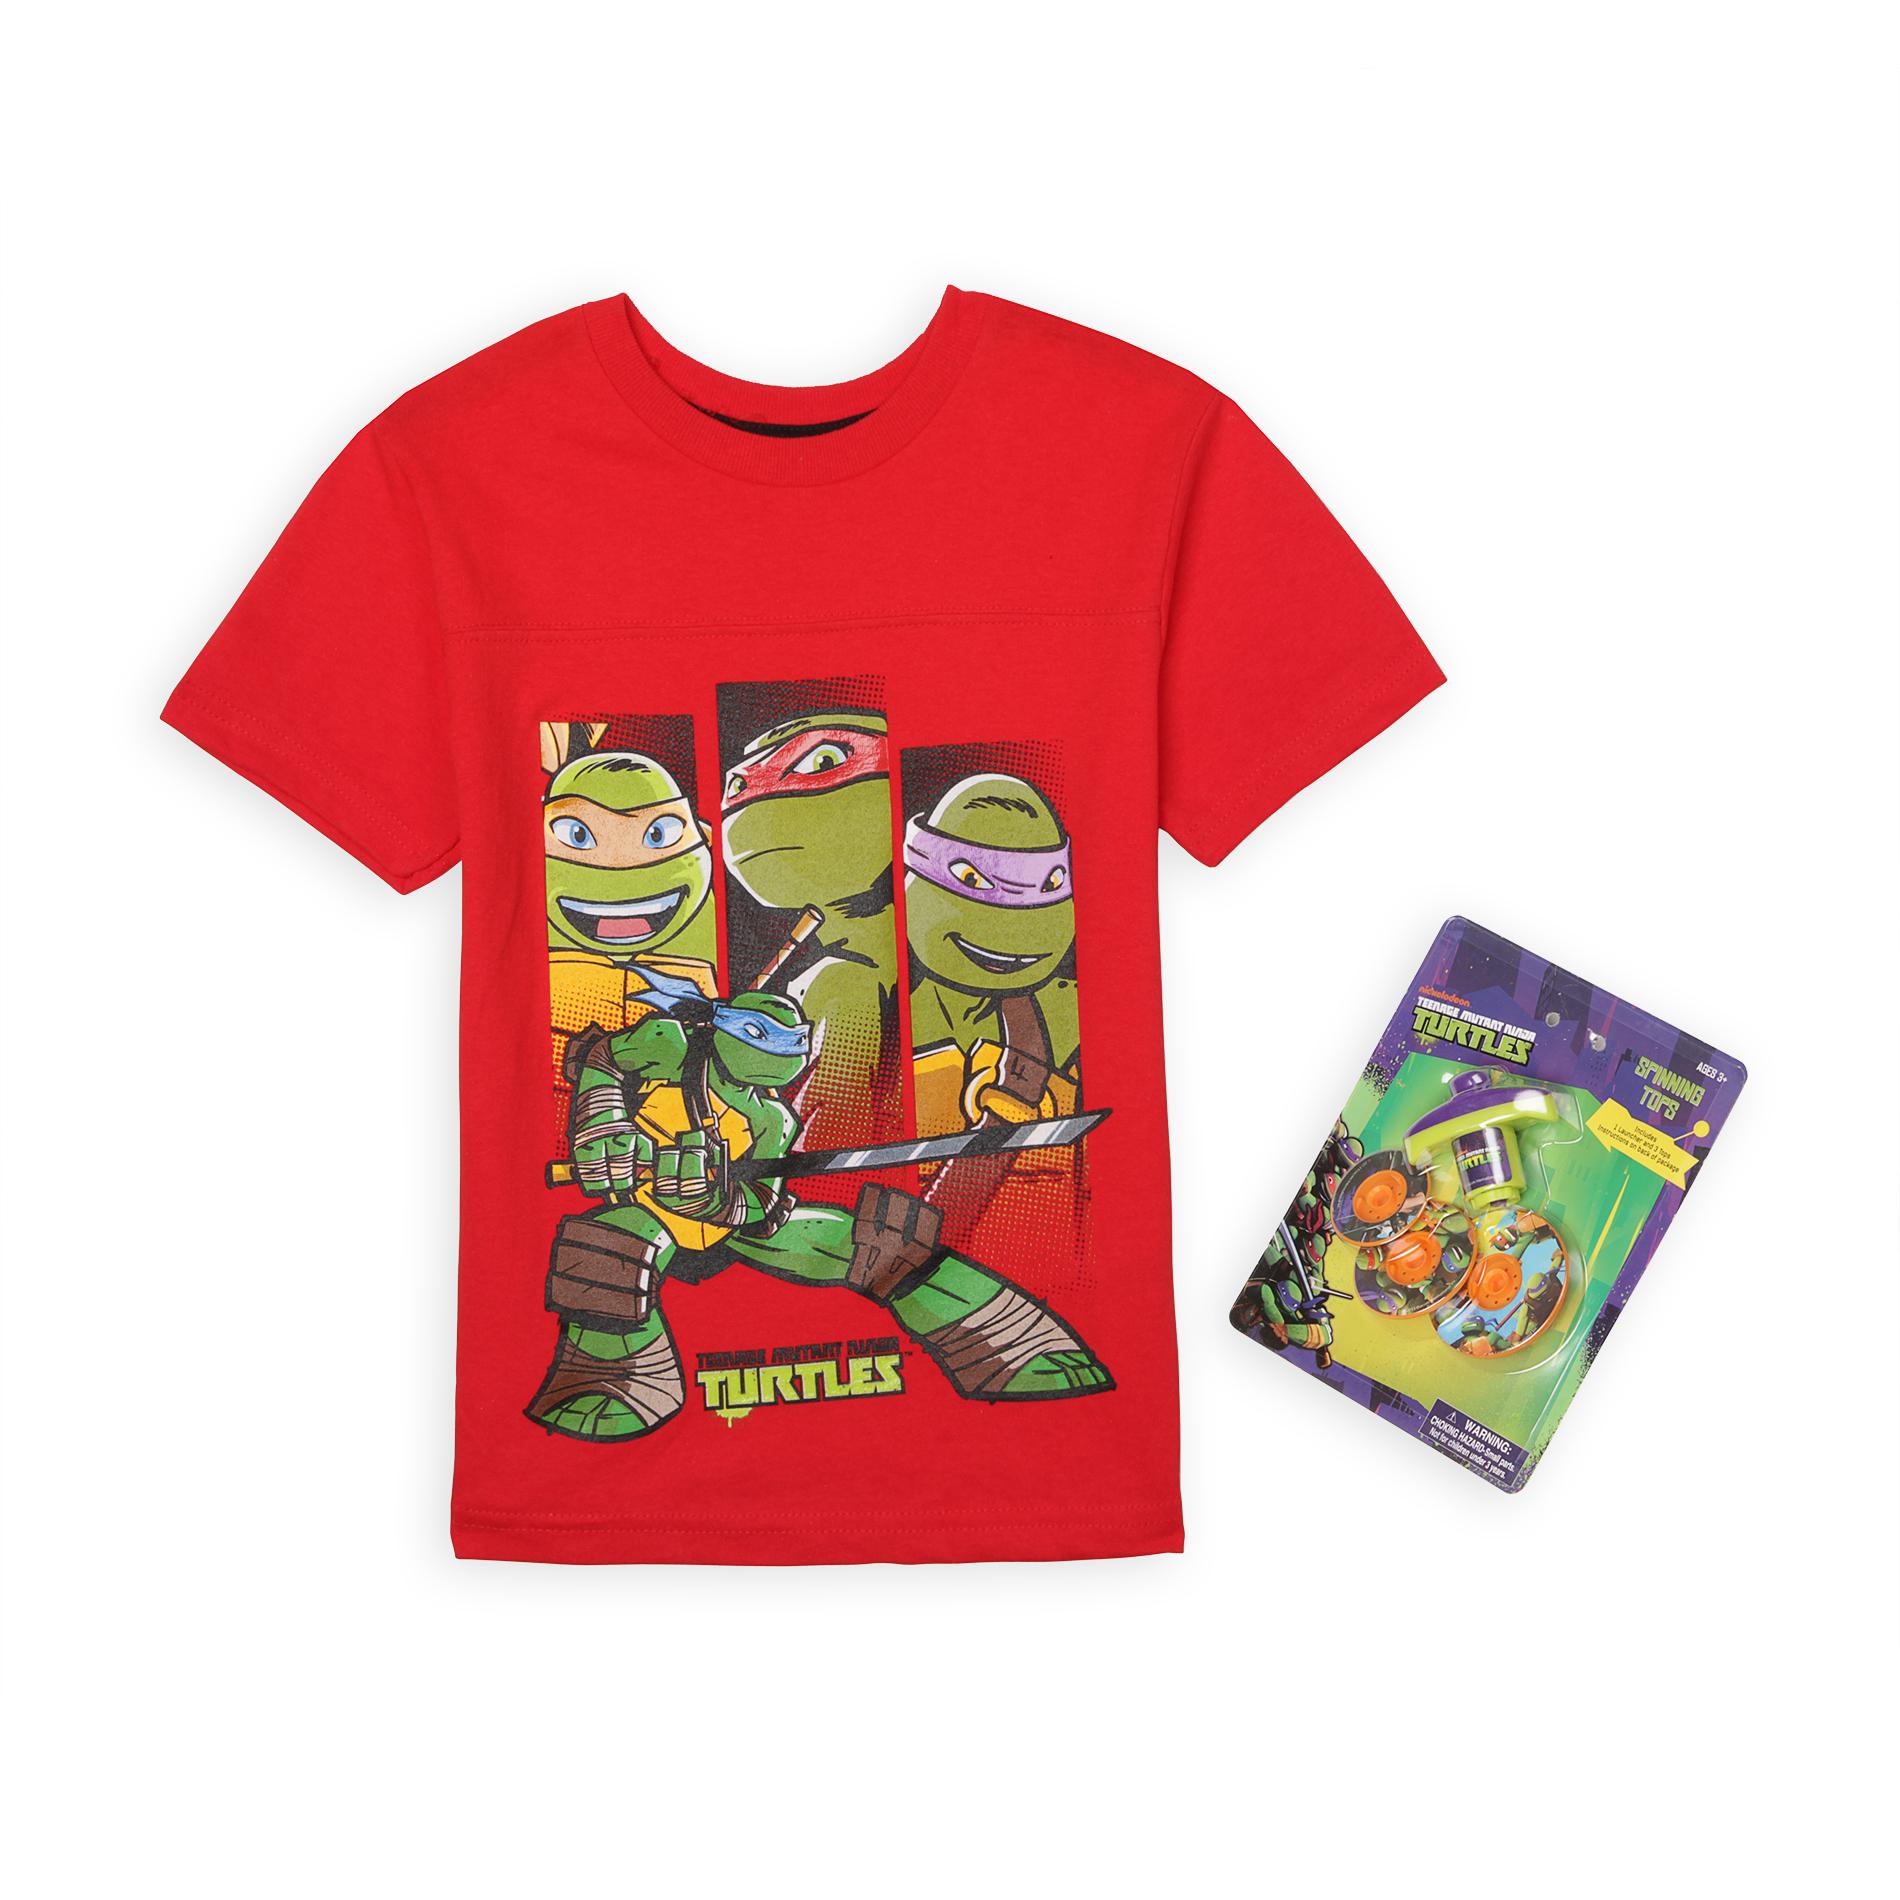 Nickelodeon Teenage Mutant Ninja Turtles Boy's T-Shirt & Toy